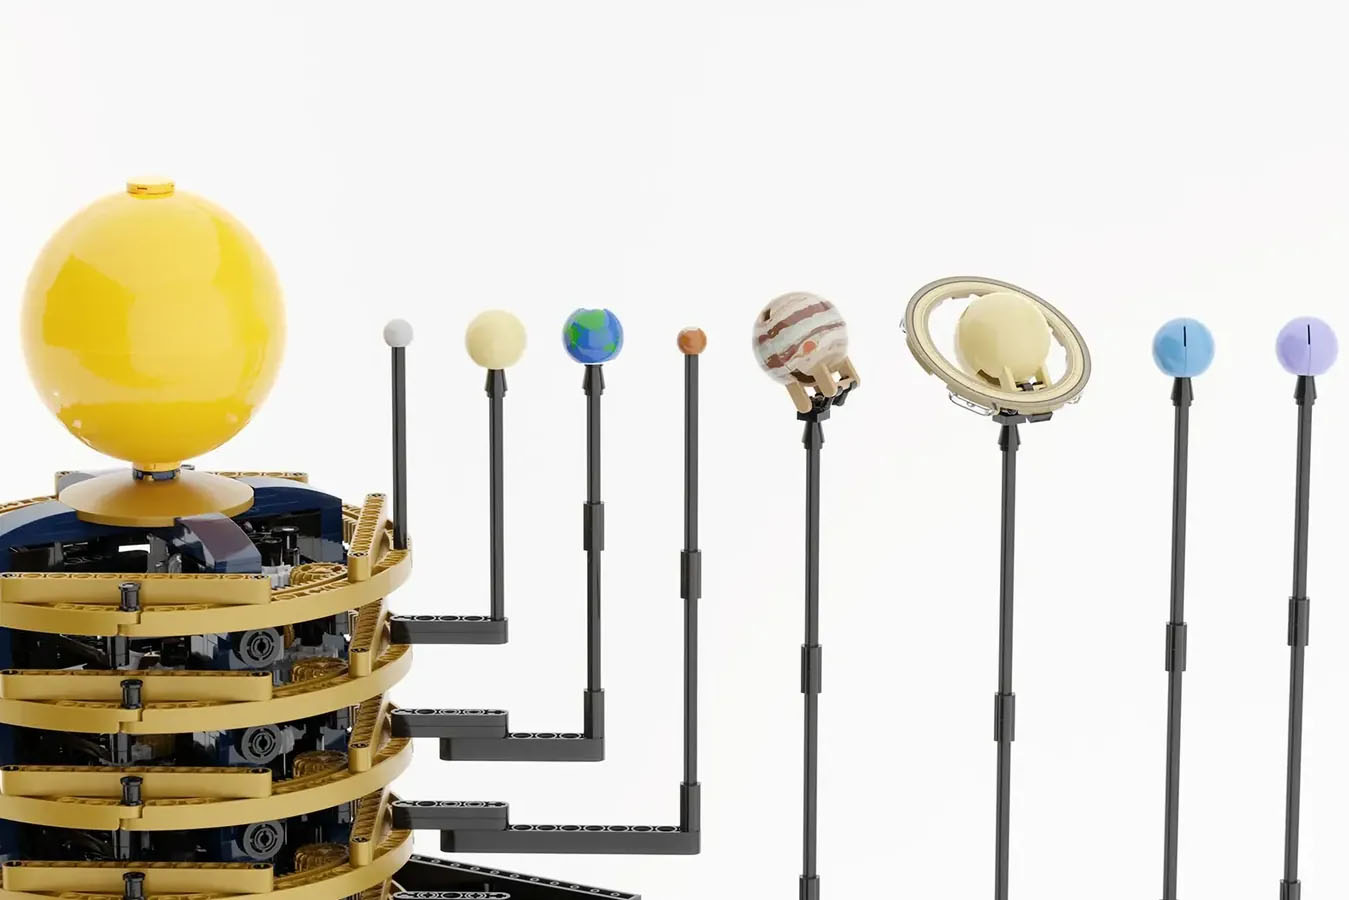  CLOCKWORK SOLAR SYSTEM Achieves 10K Support on LEGO IDEAS